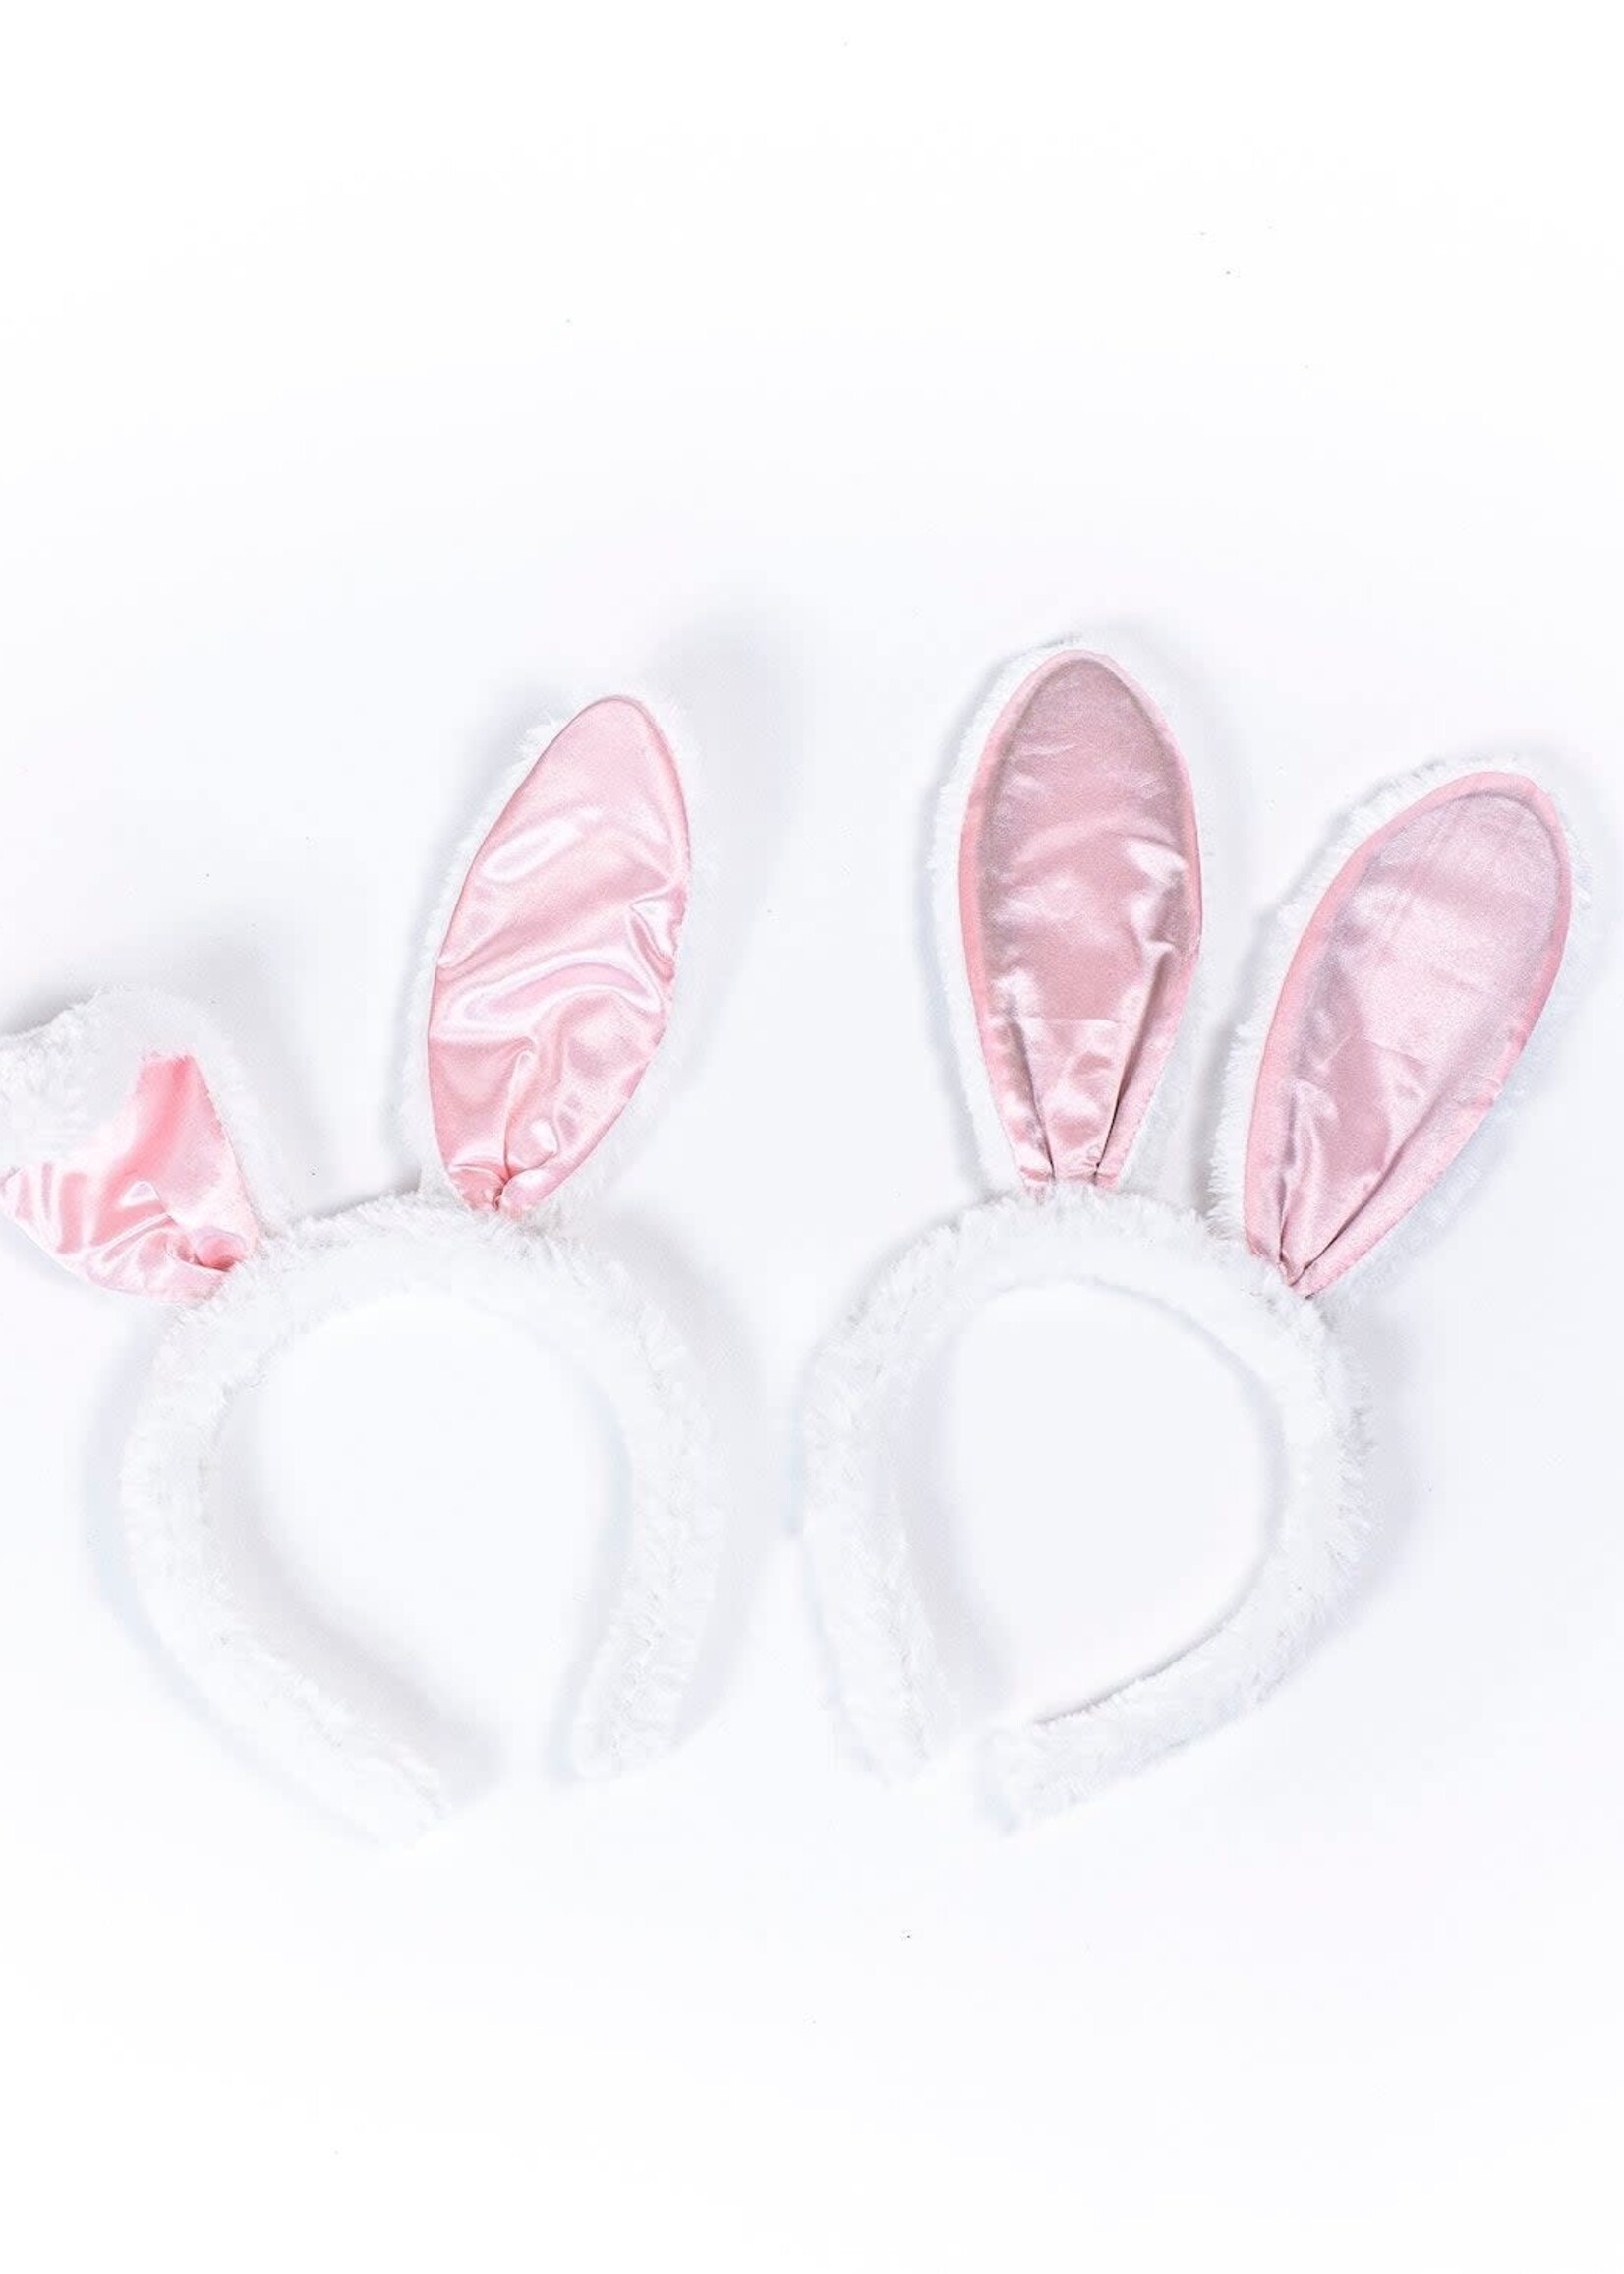 Jack Rabbit Creations Inc. Bendy Bunny Ears